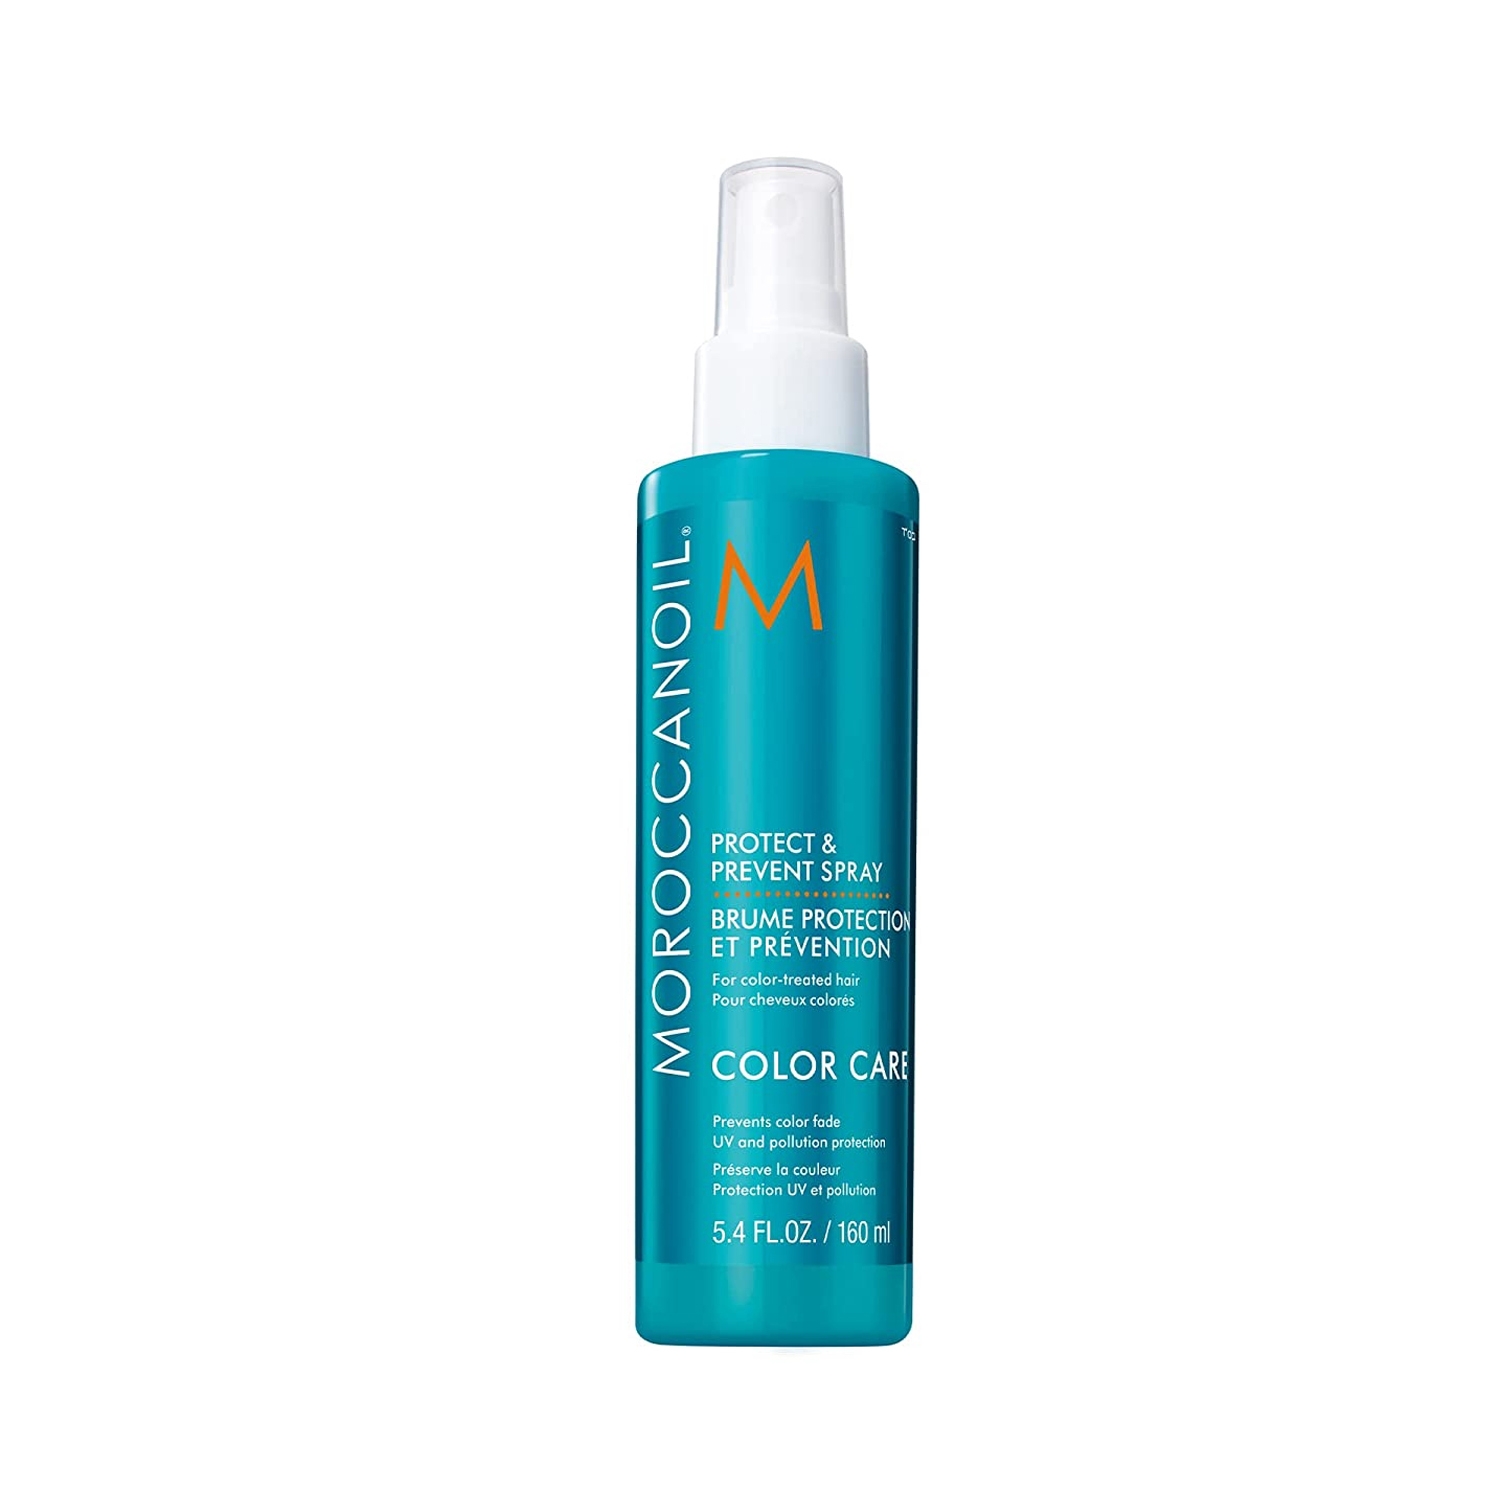 Moroccanoil | Moroccanoil Protect and Prevent Hair Spray - (160ml)